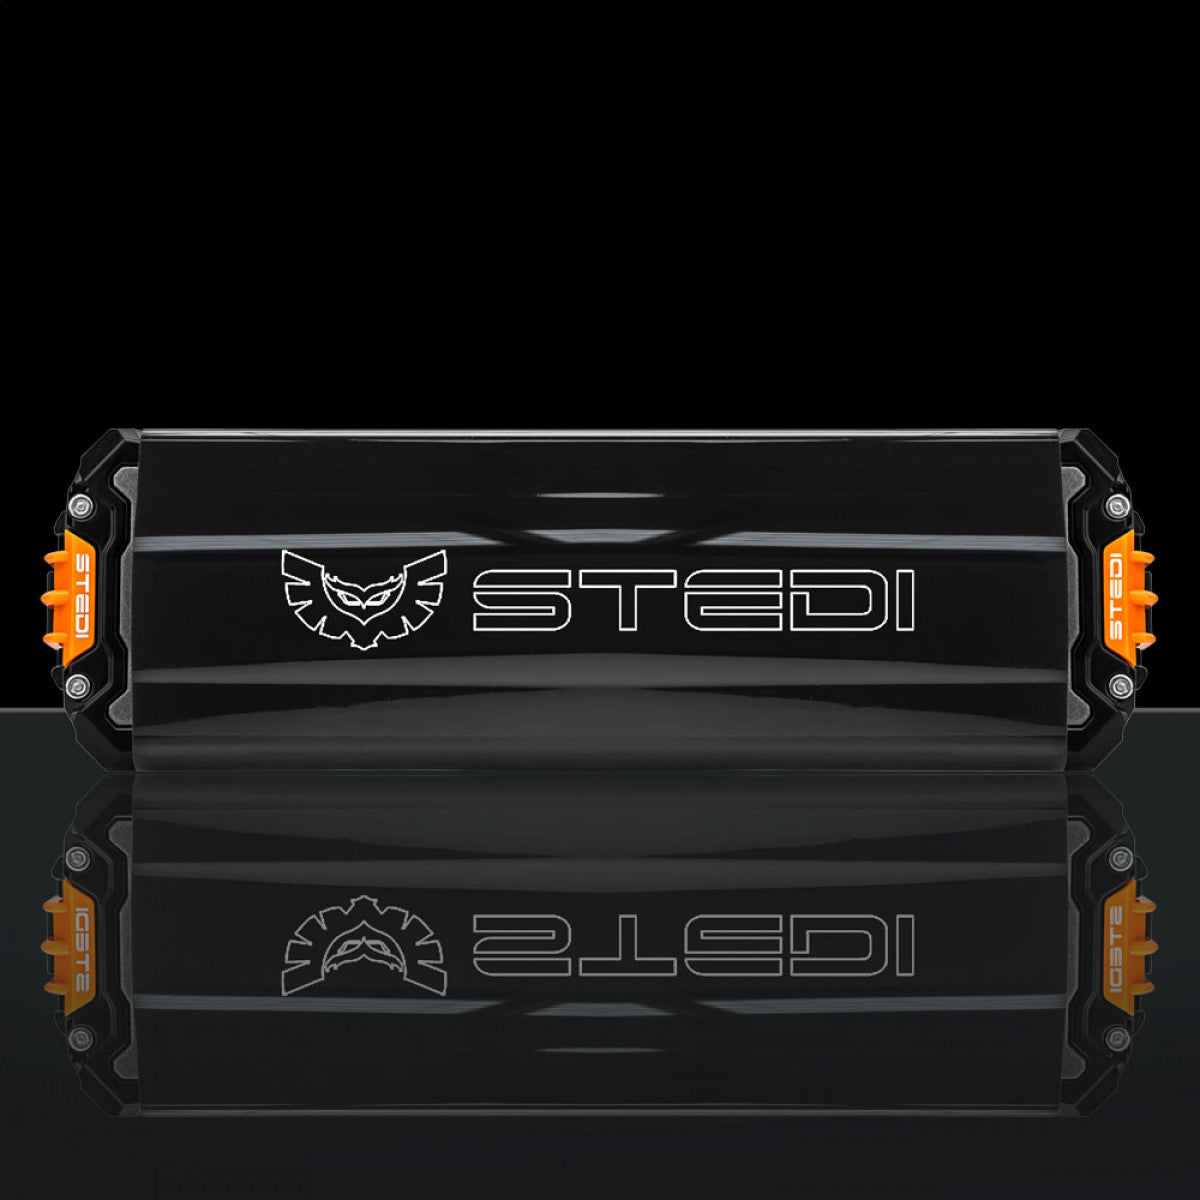 STEDI ST3303 Pro Series Black Out Abdeckung